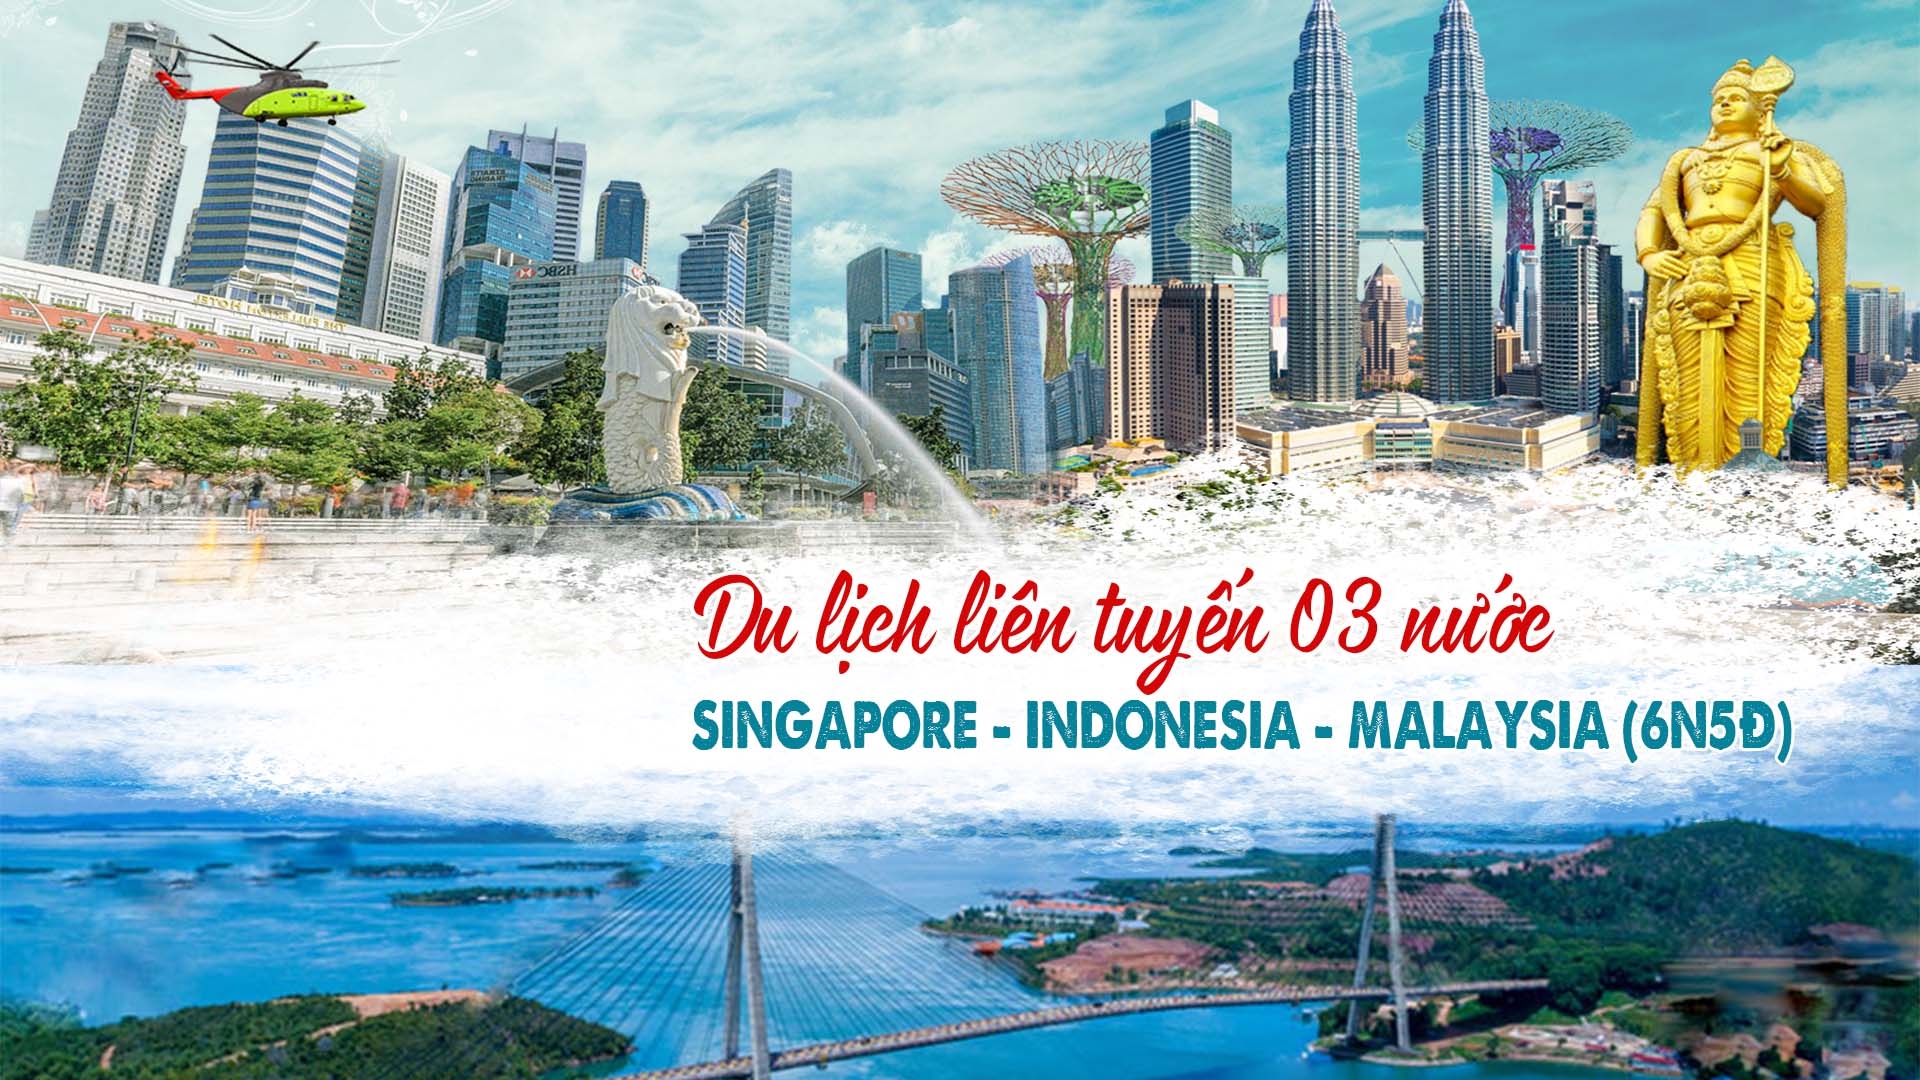 Tour liên tuyến 03 nước Singapore - Indonesia - Malaysia